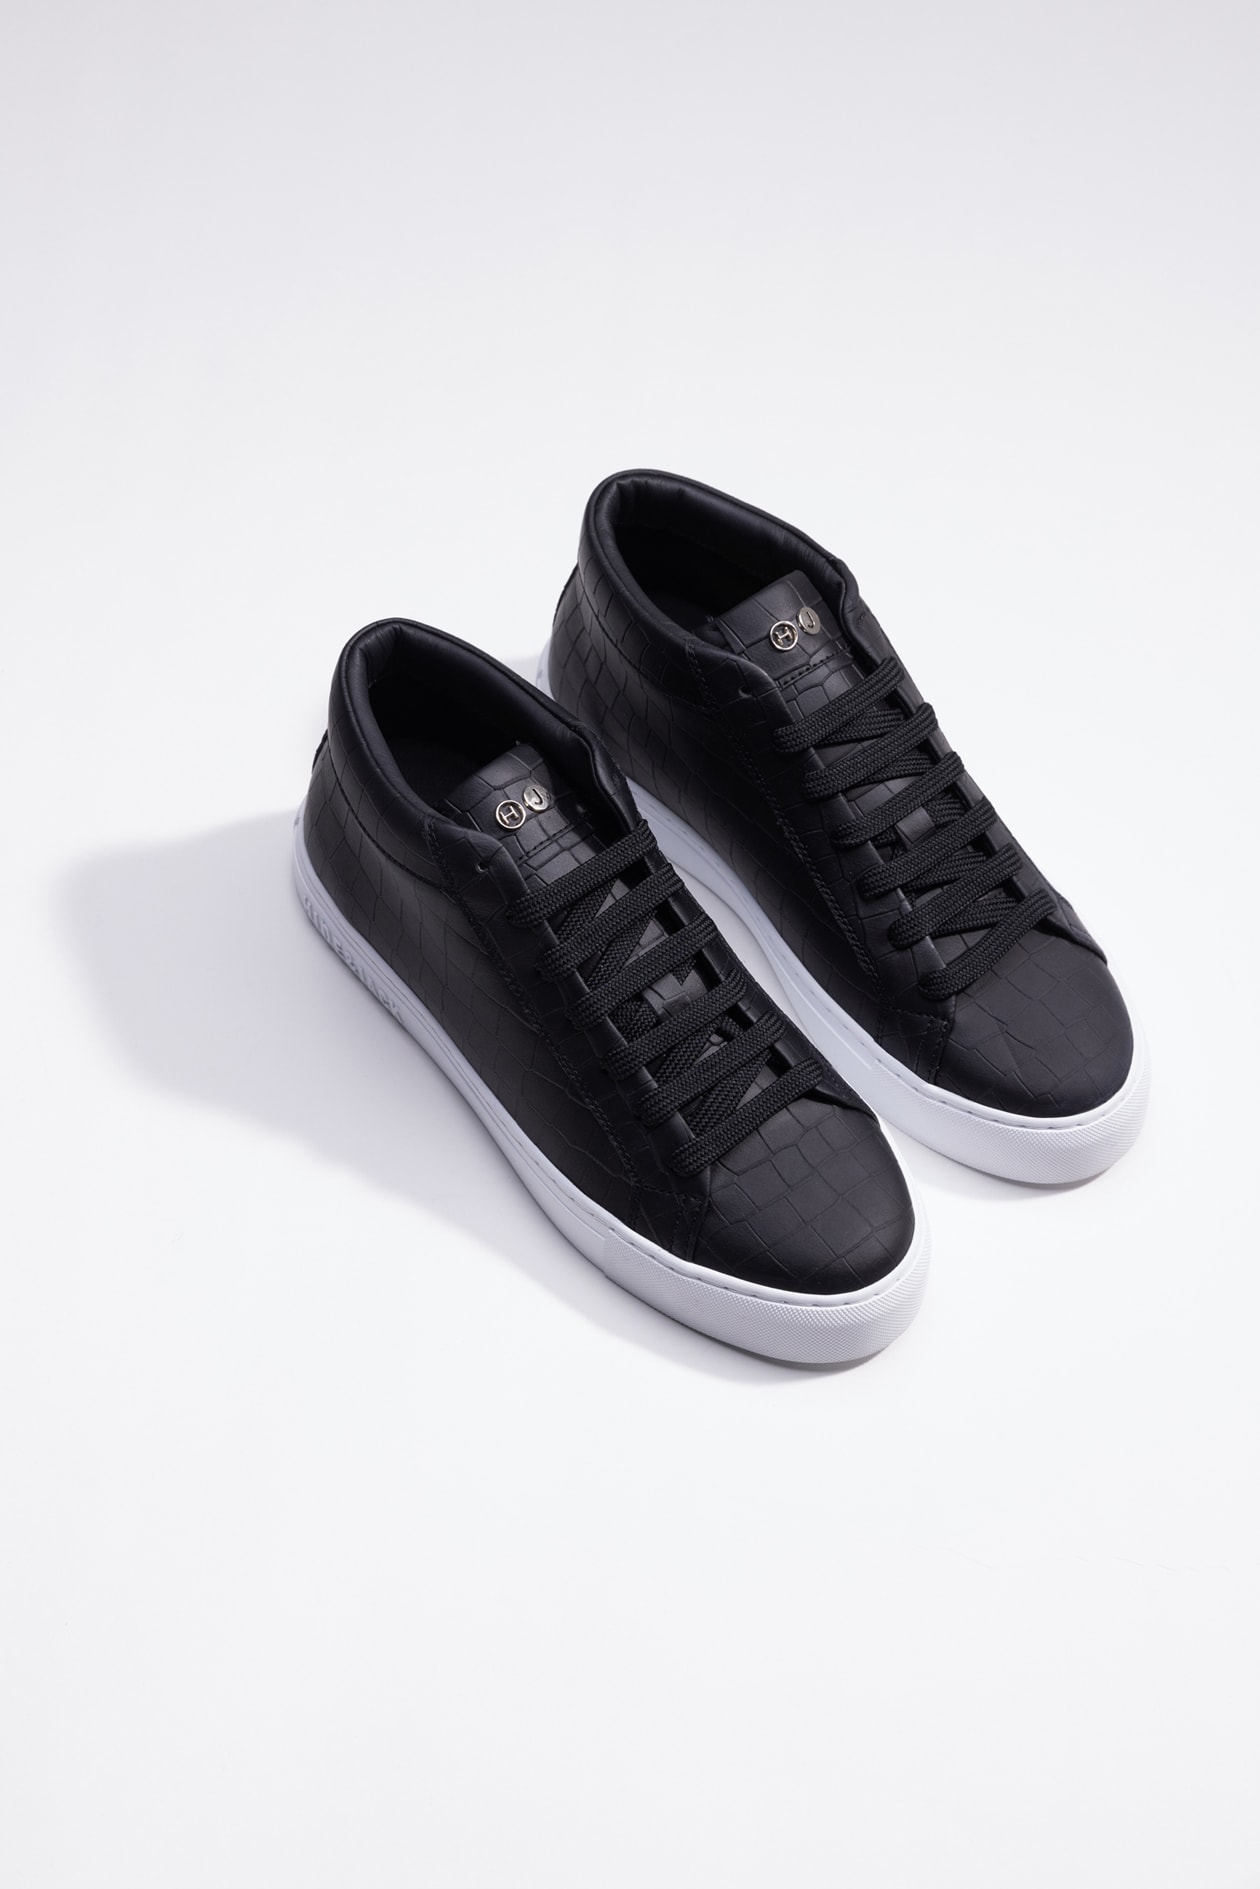 Hide&amp;jack High Top Sneaker - Essence Black White